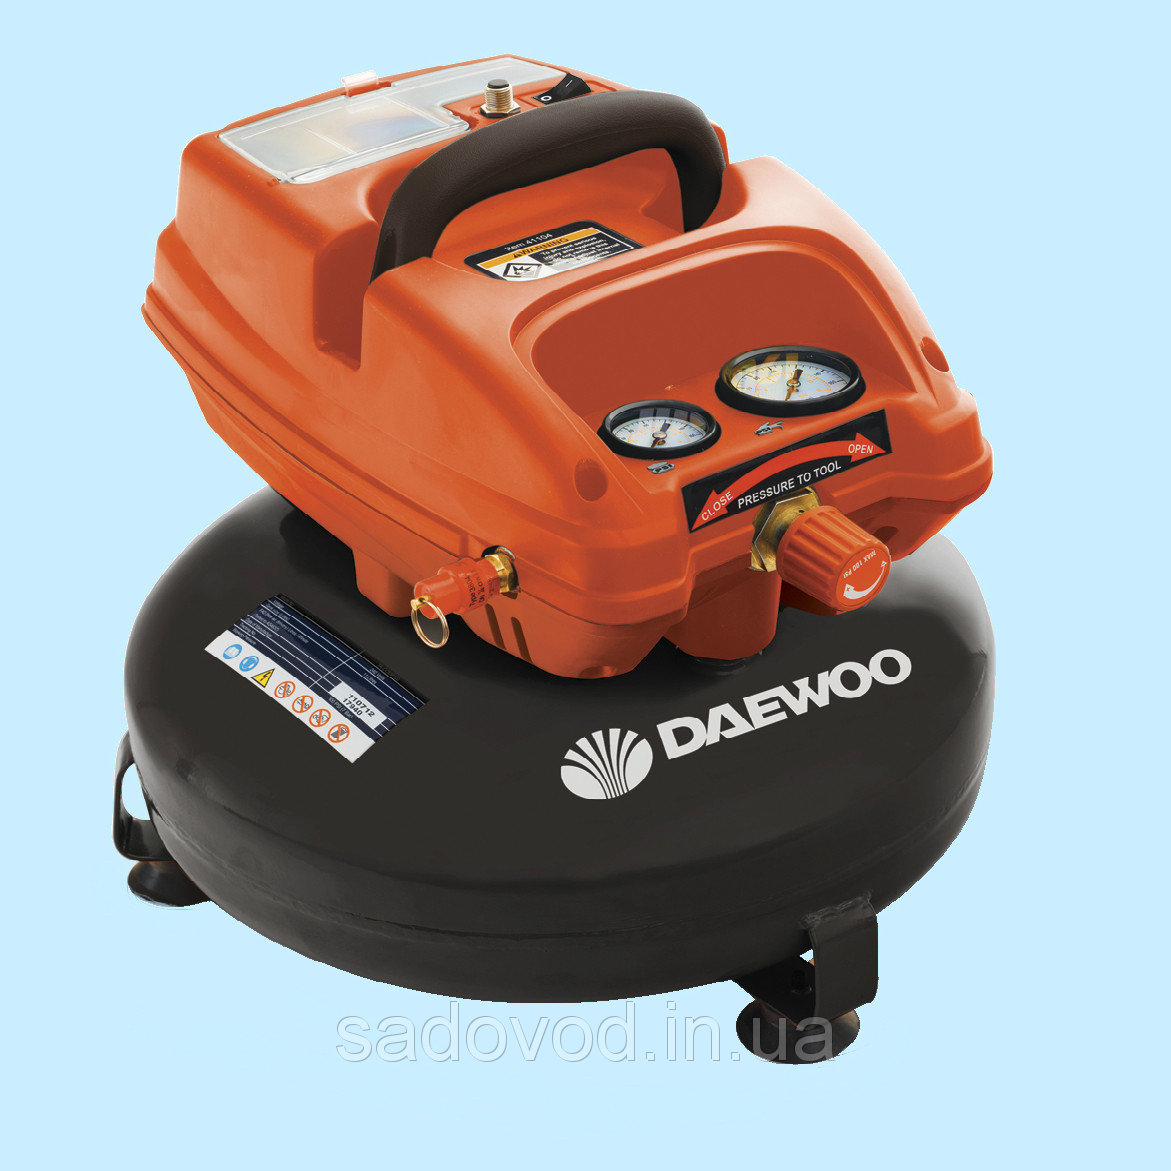 Купить компрессор daewoo. Daewoo компрессор dac240. Компрессор Daewoo 2.2 КВТ. Daewoo DAC 480 S. Регулировочный вал на компрессор Daewoo DAC 500.